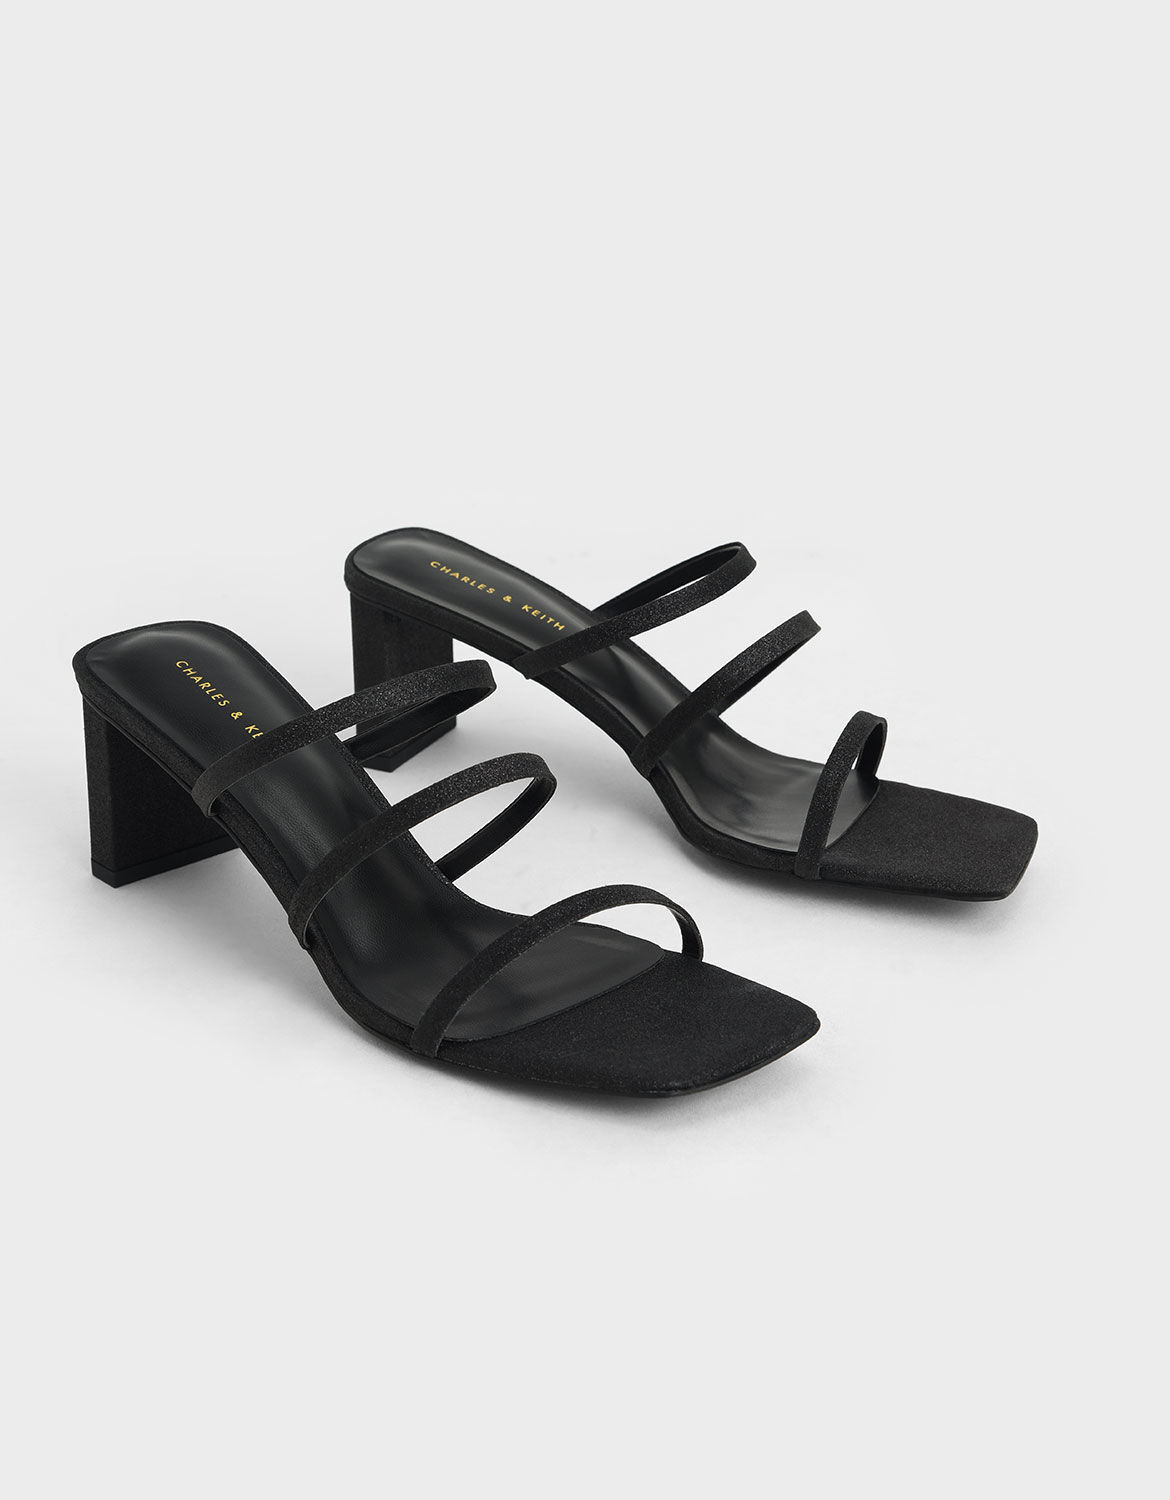 Shop Women's Heels | Exclusive Styles | CHARLES & KEITH USD